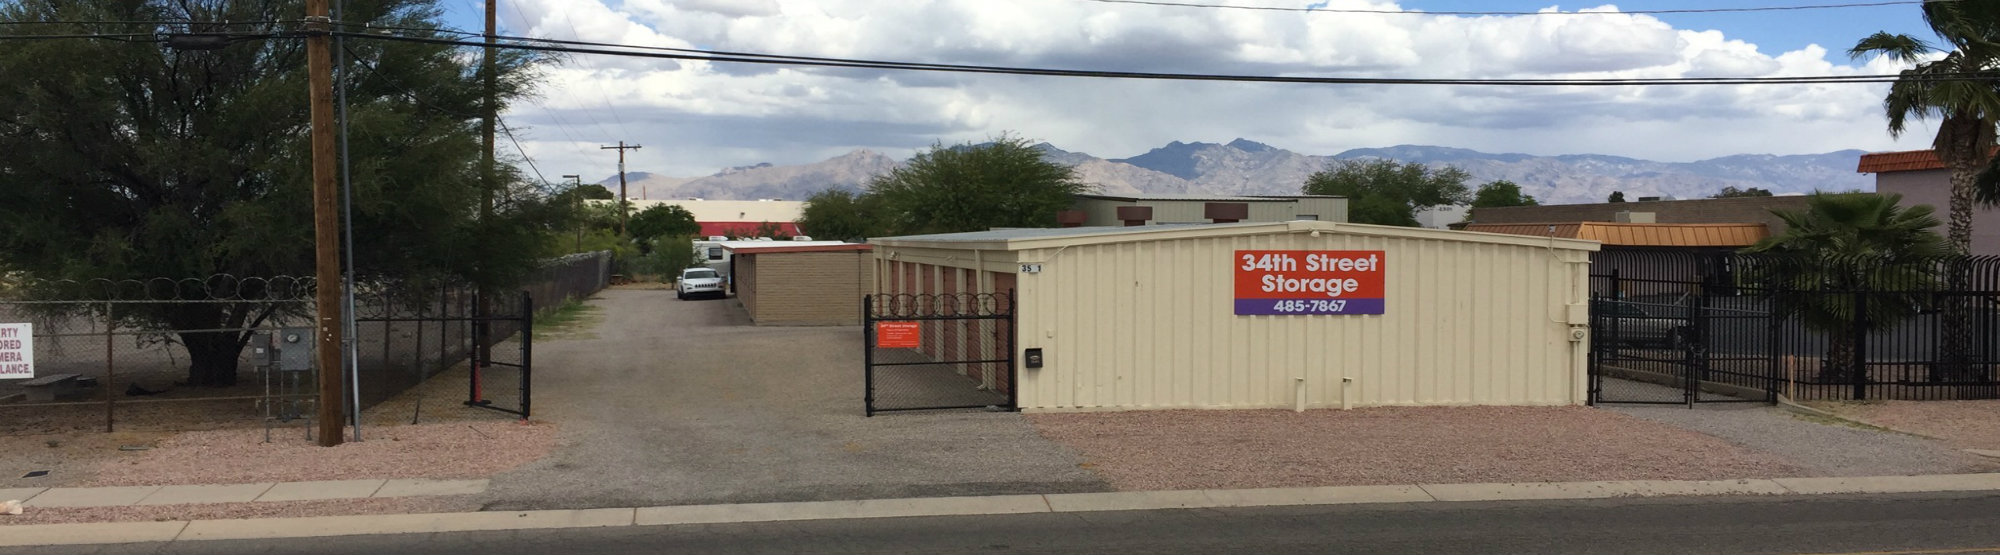 Self Storage Facility in Tucson, AZ